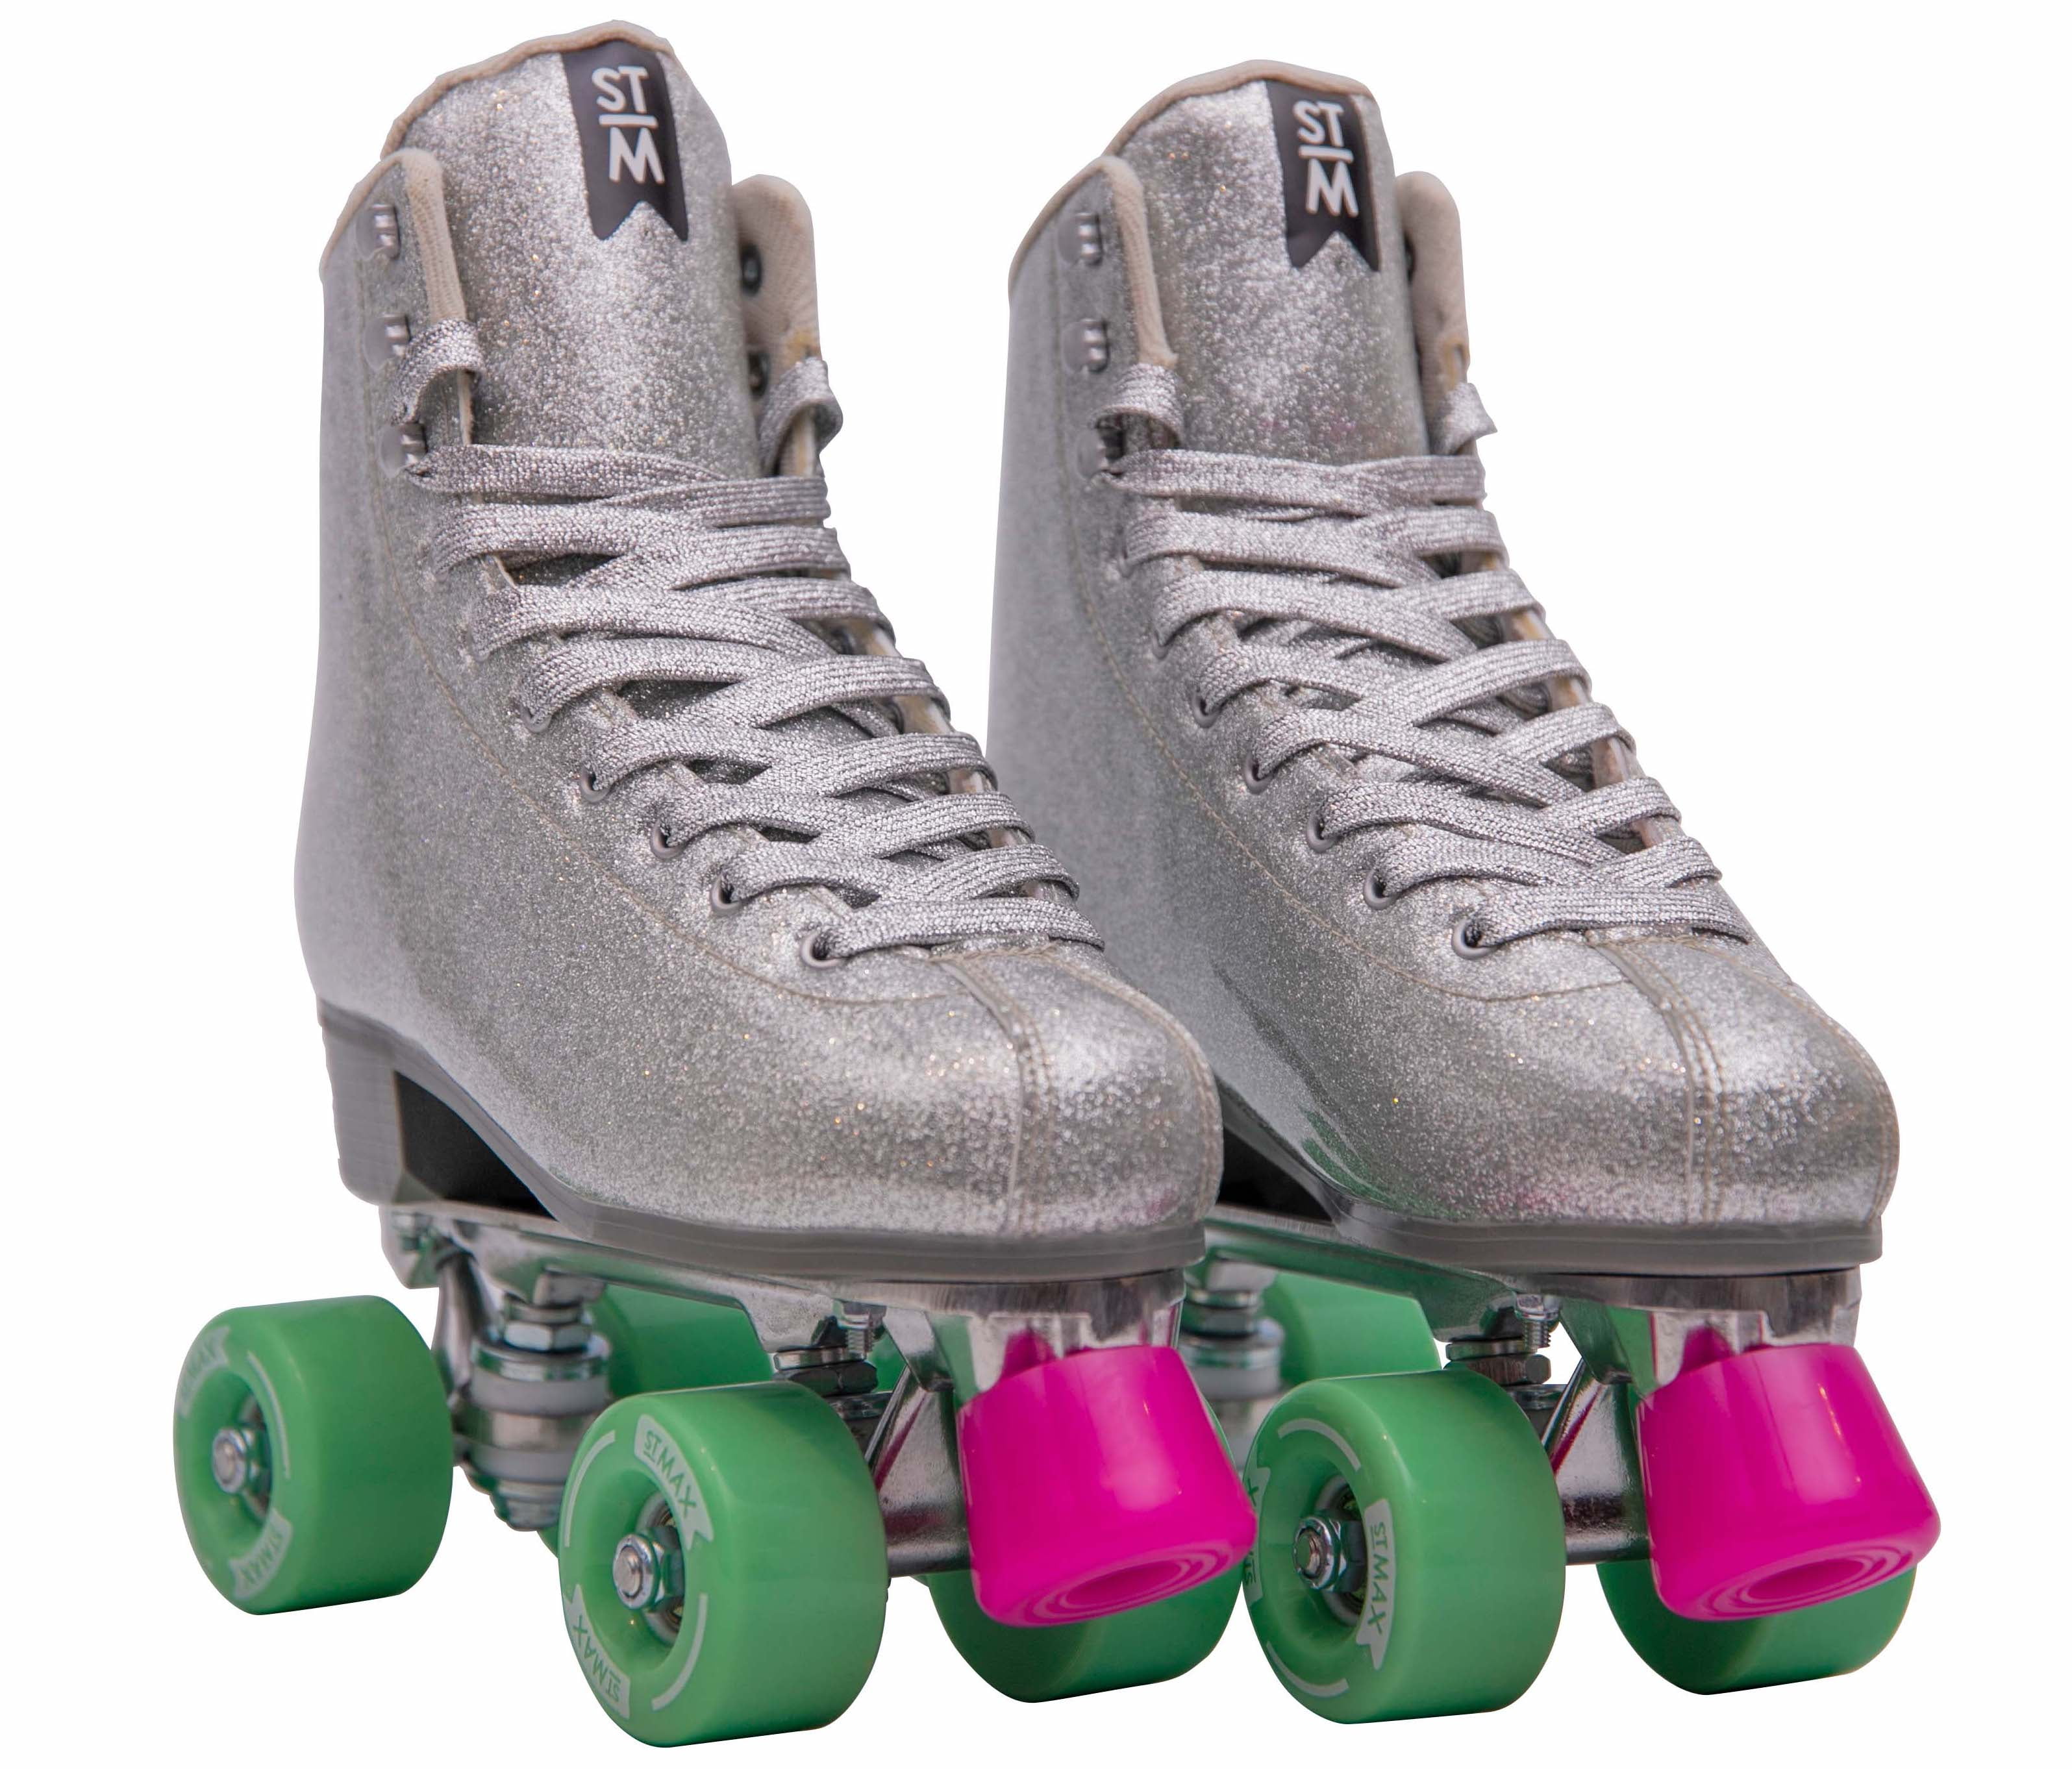 Roller Skates for Women Size 8 Quad blades Derby Gray Sparkles STMAX 